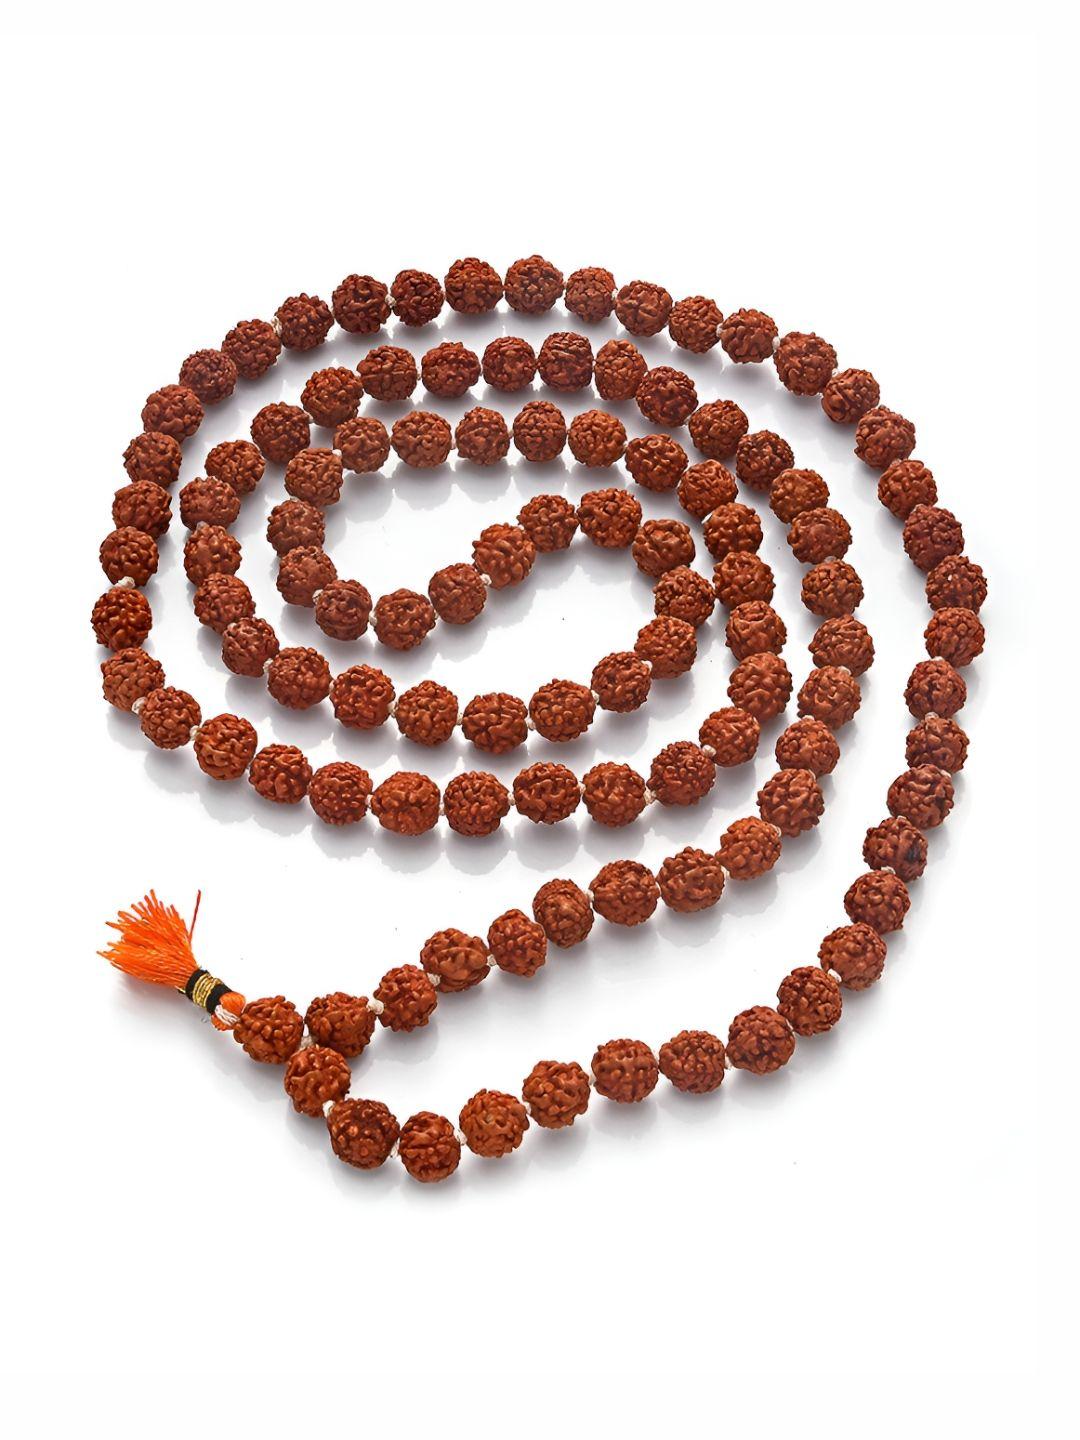 pray everyday rudraksha mala with 108 beads